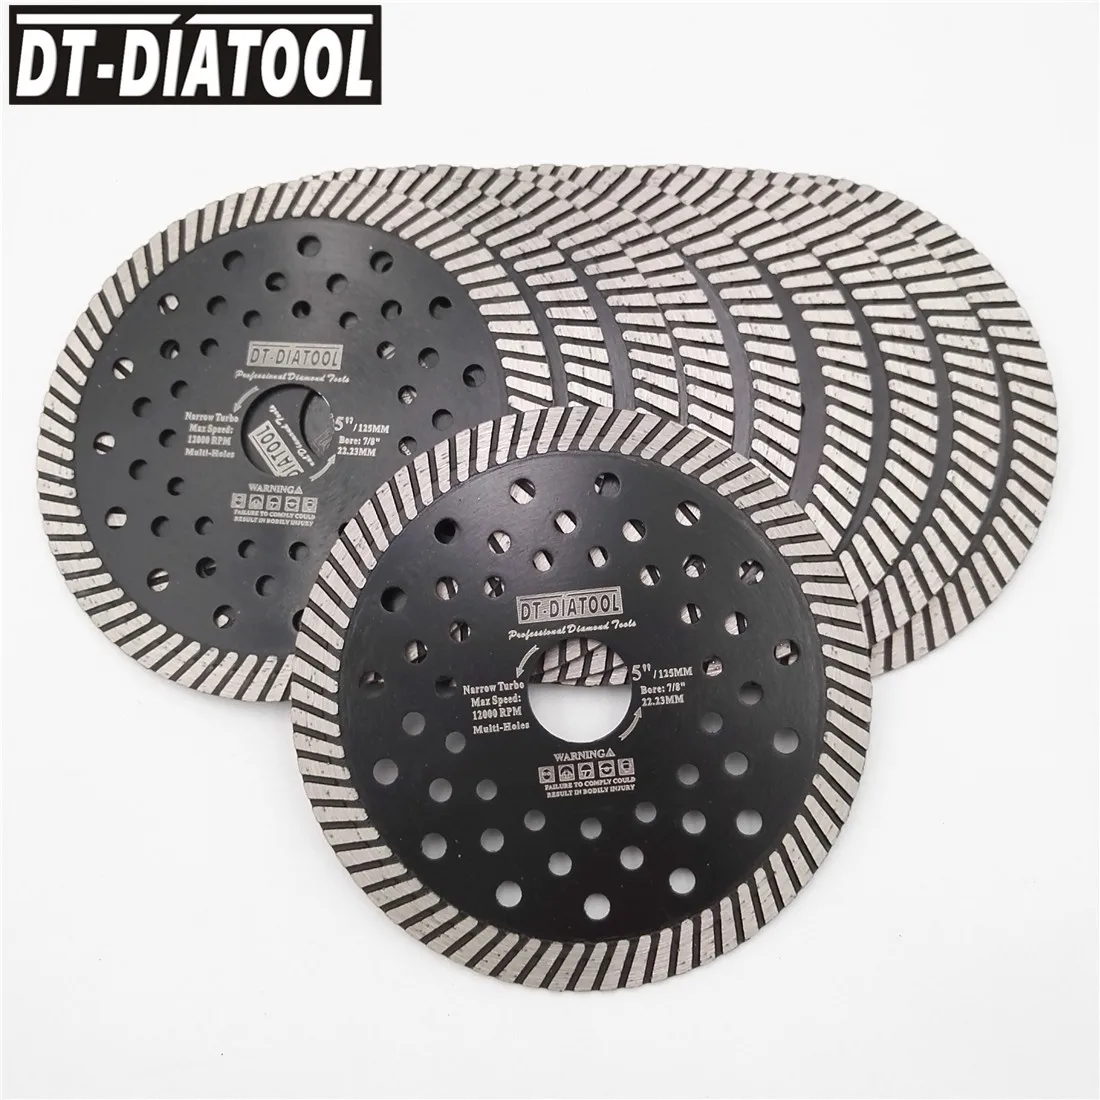 DT-DIATOOL 10pcs 5 inch Hot Pressed Narrow Turbo Diamond Saw Blades Dia 125mm Cutting Discs Multi Holes Hard Material Ceramic